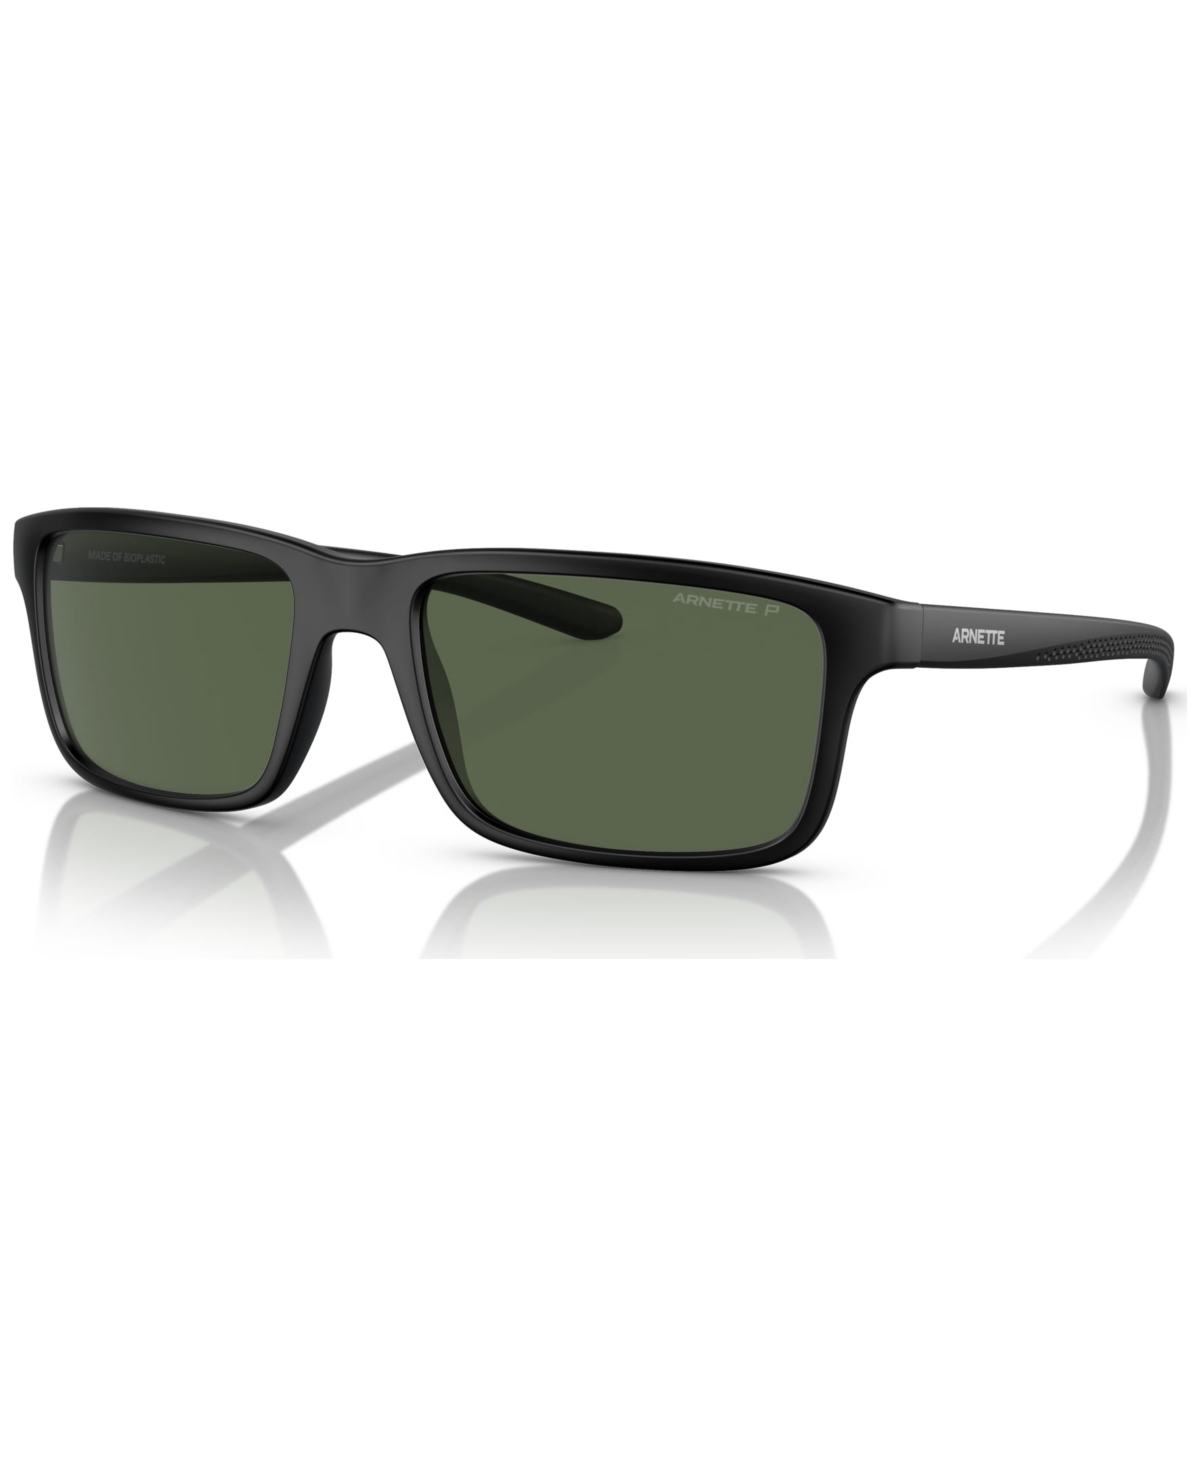 Men's Polarized Sunglasses, AN432257-p 57 - Matte Black